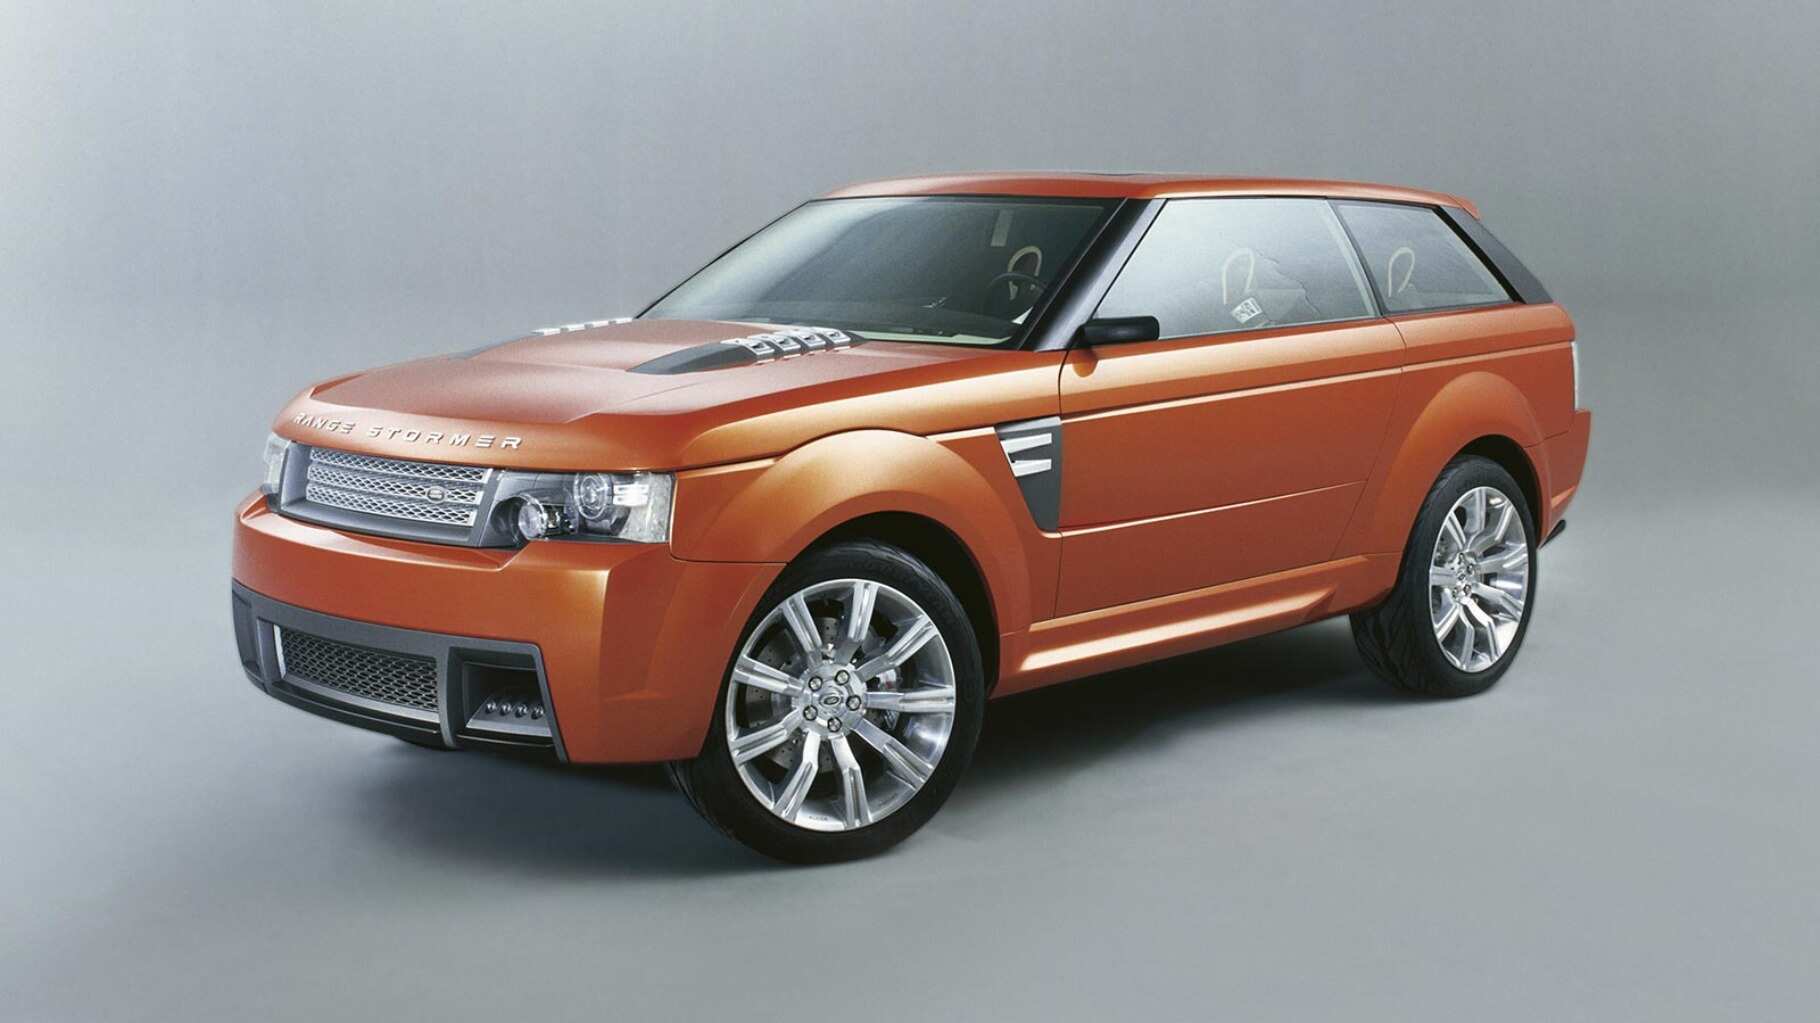 Range Rover Sport Production